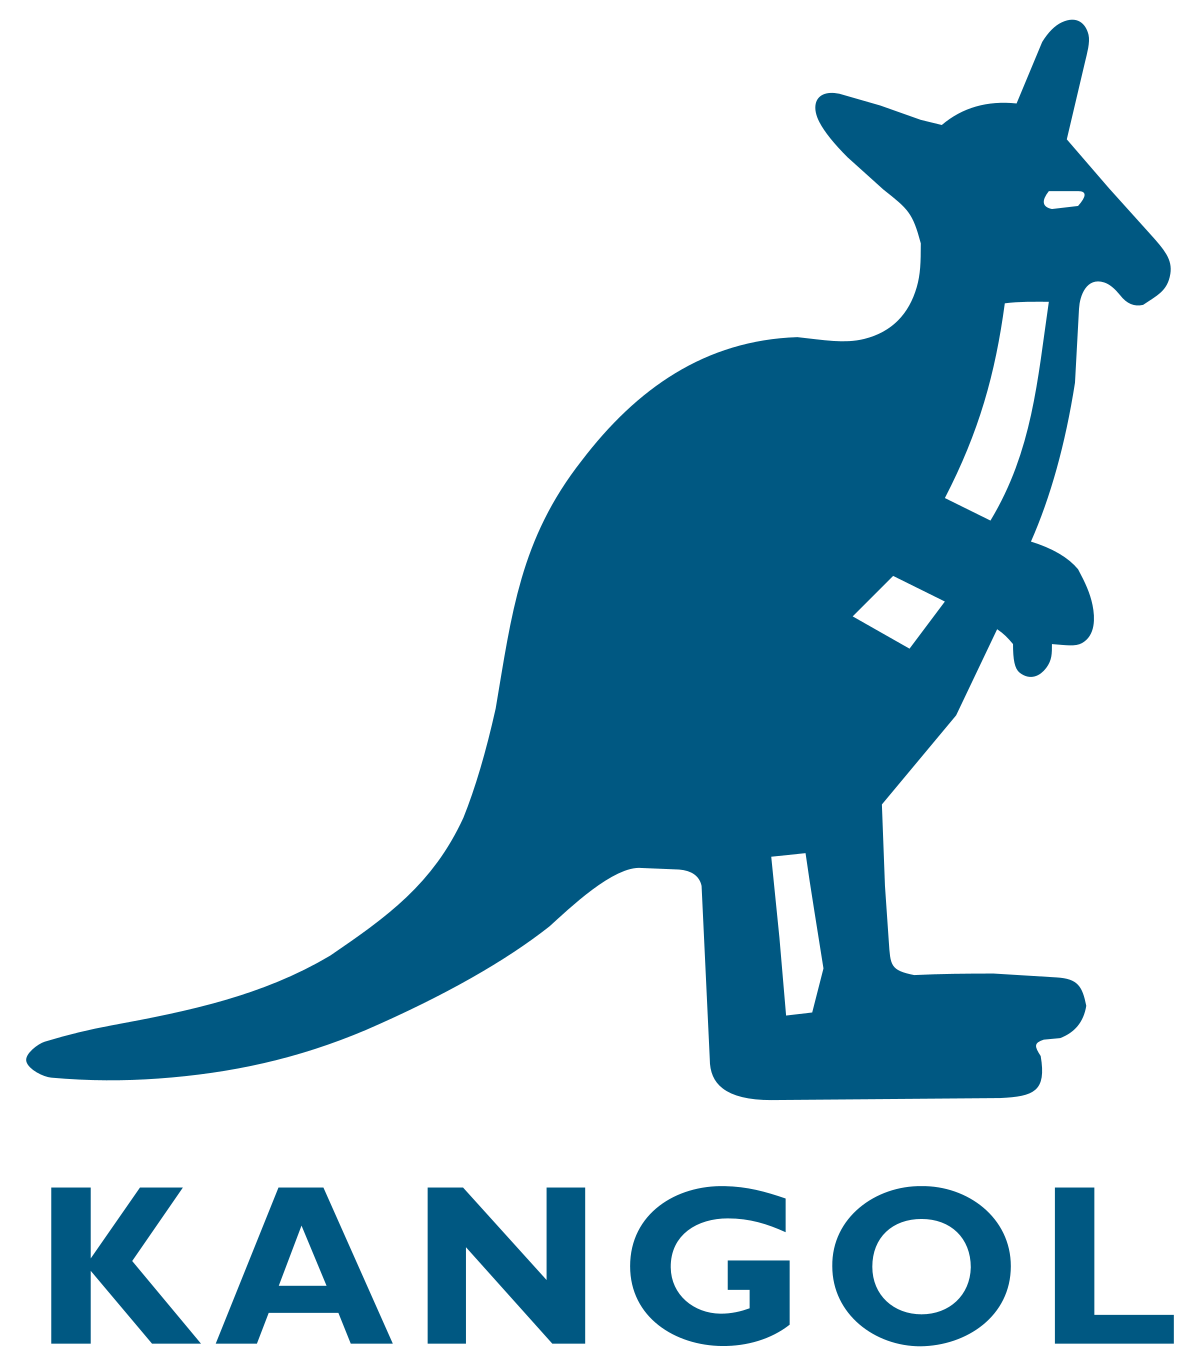 Kangol.svg.png